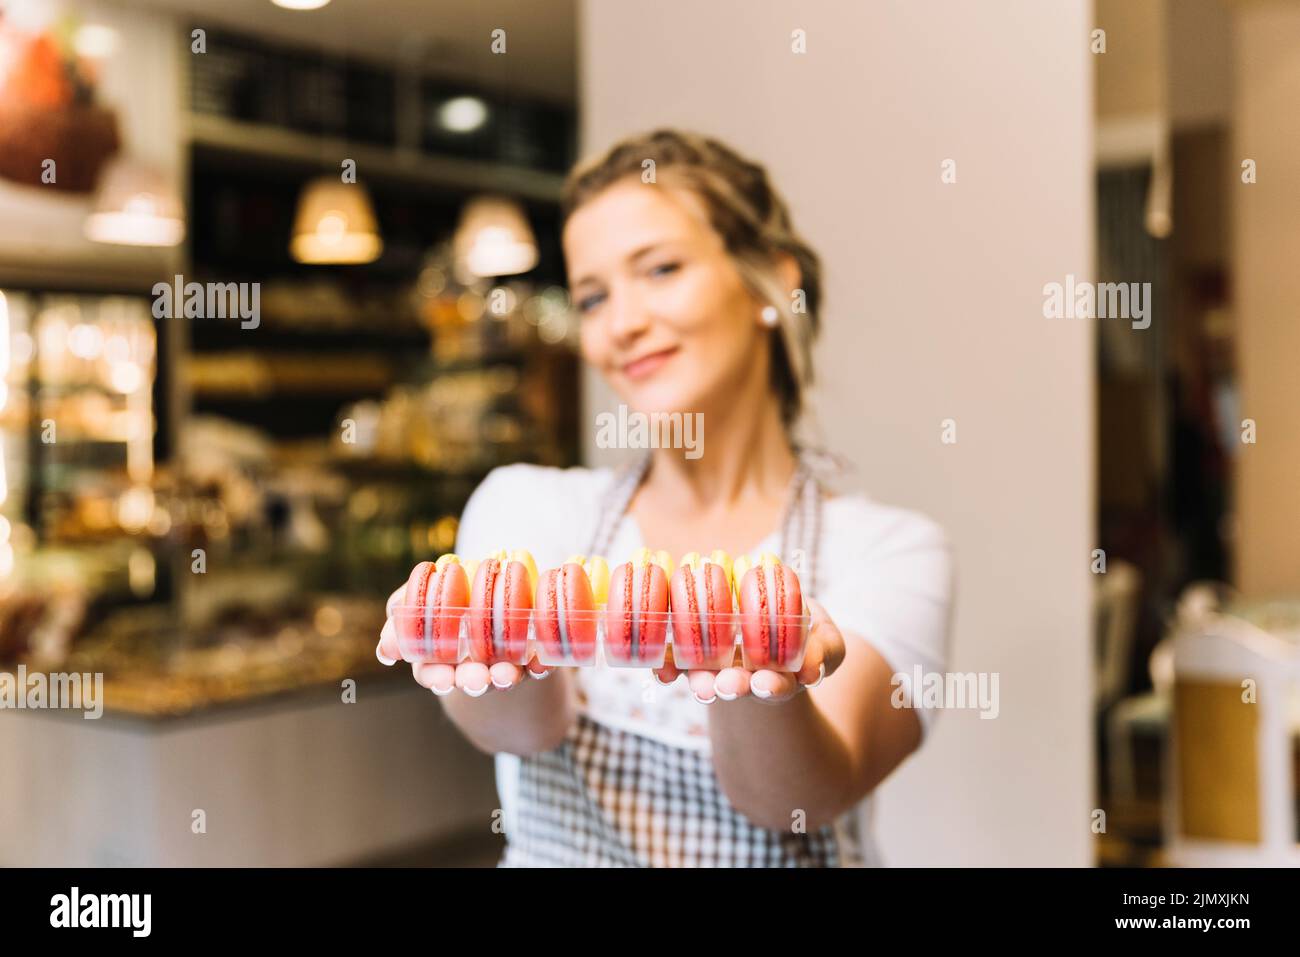 Waitress offering macarons Stock Photo